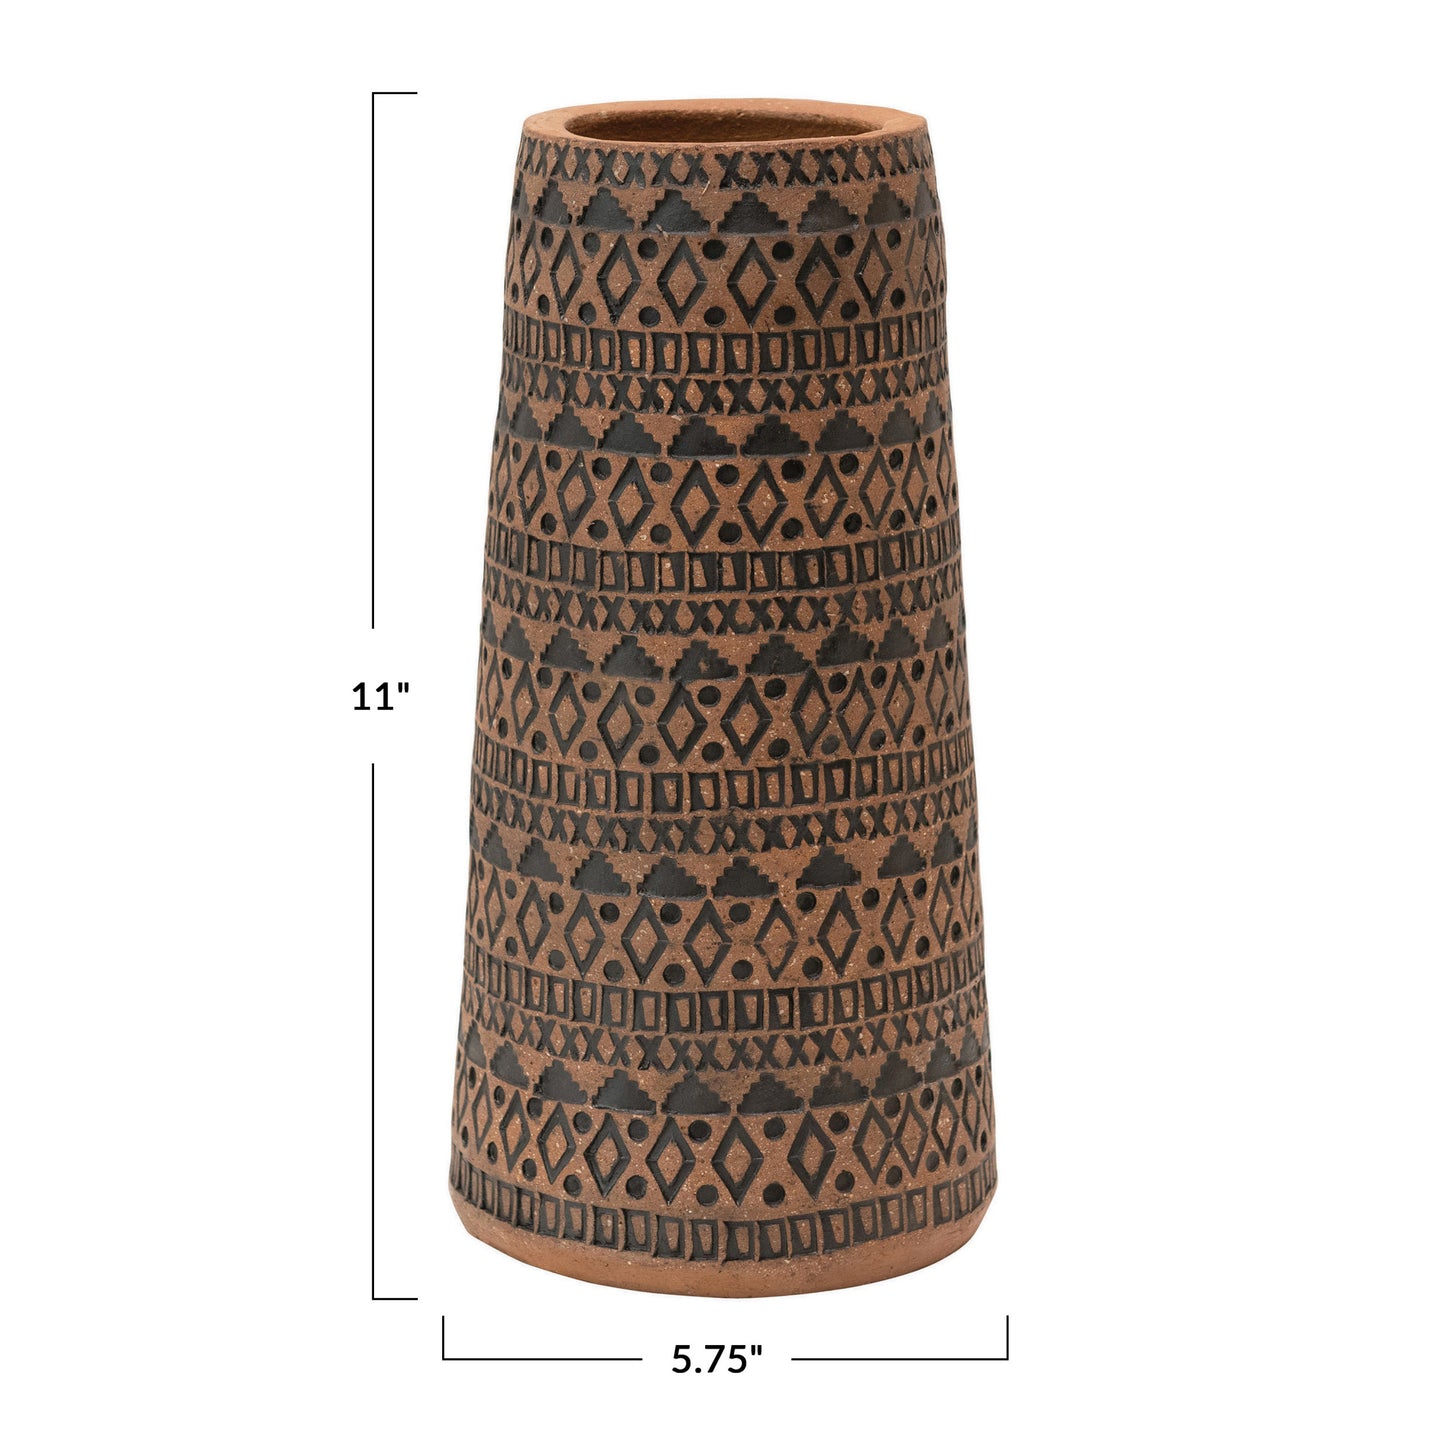 Handmade Debossed Terracotta Vase